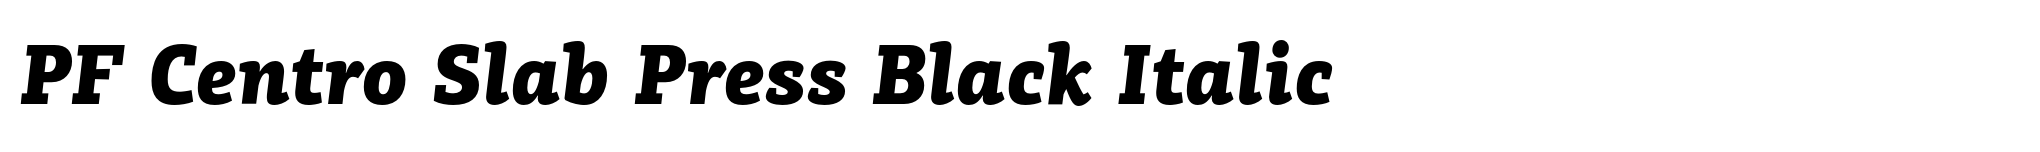 PF Centro Slab Press Black Italic image